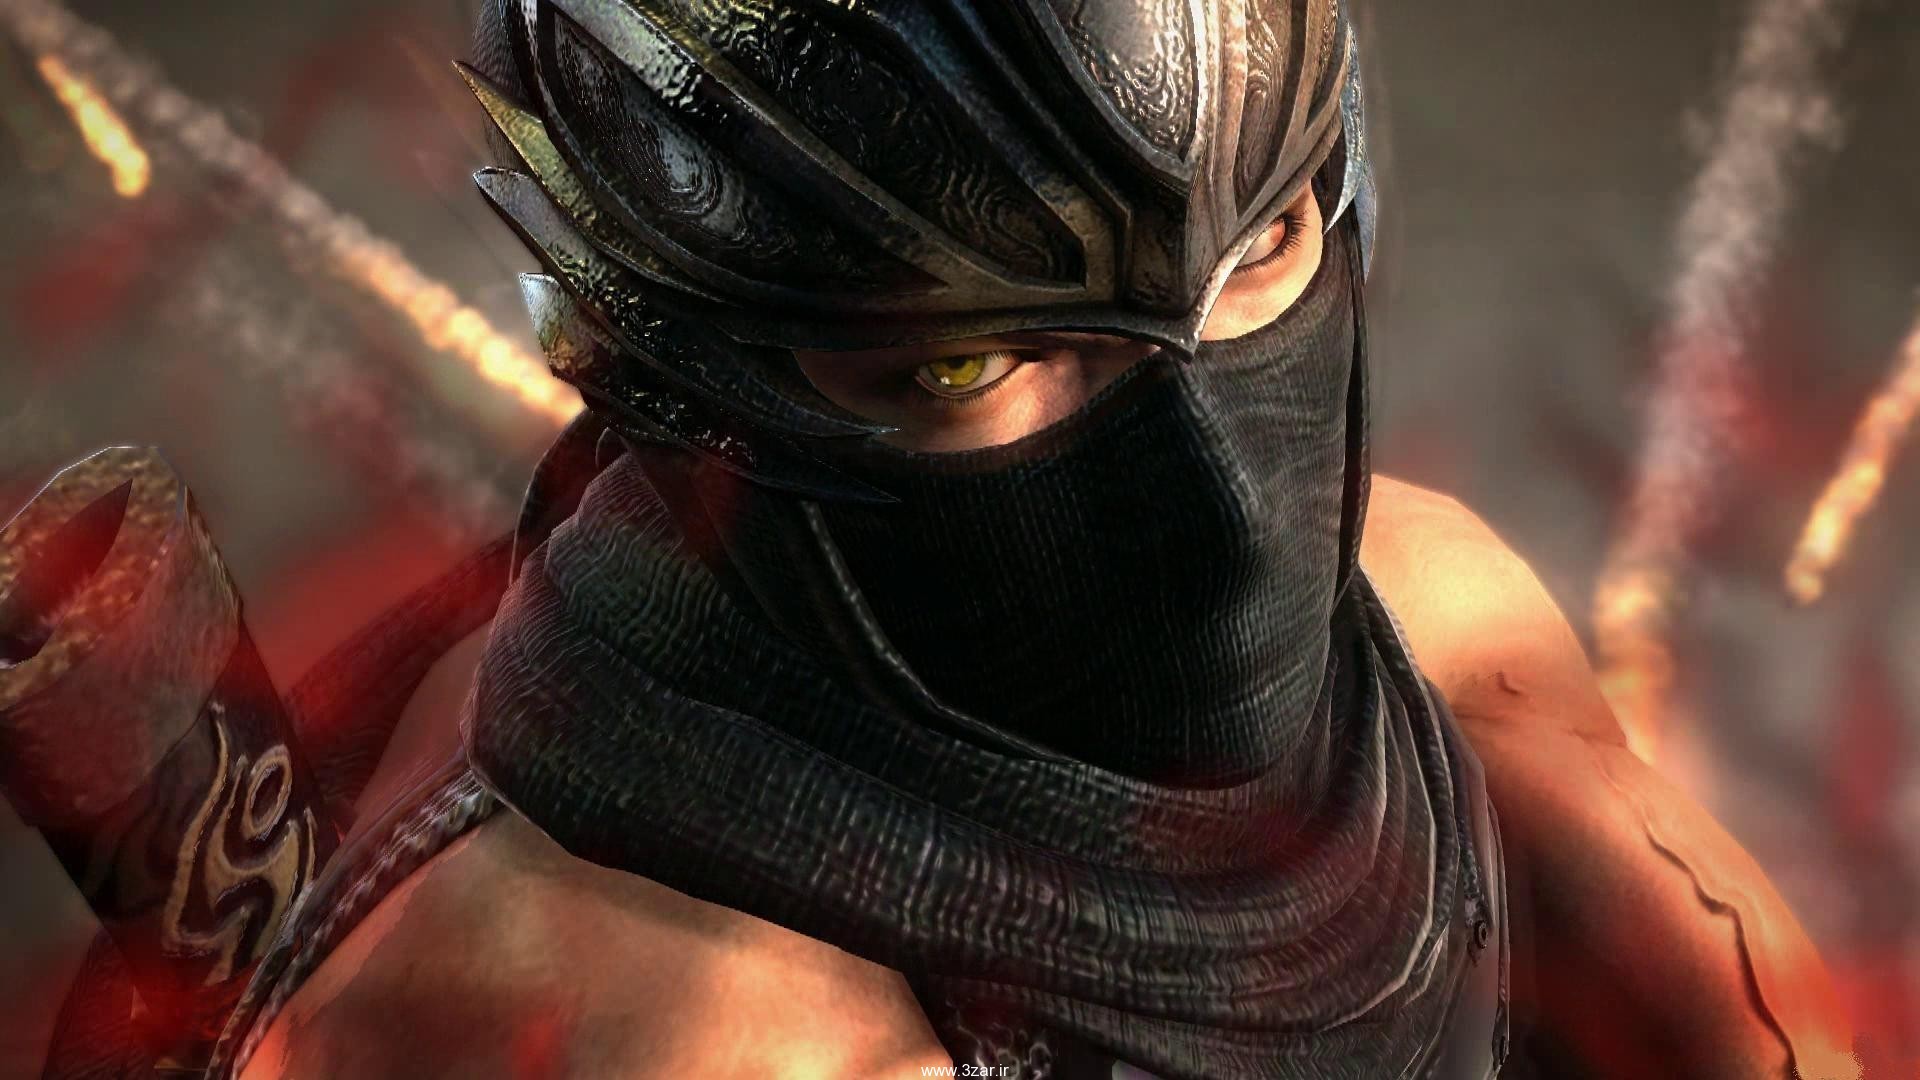 262085 Bild herunterladen computerspiele, ninja gaiden 3, ninja, krieger, ninja gaiden - Hintergrundbilder und Bildschirmschoner kostenlos